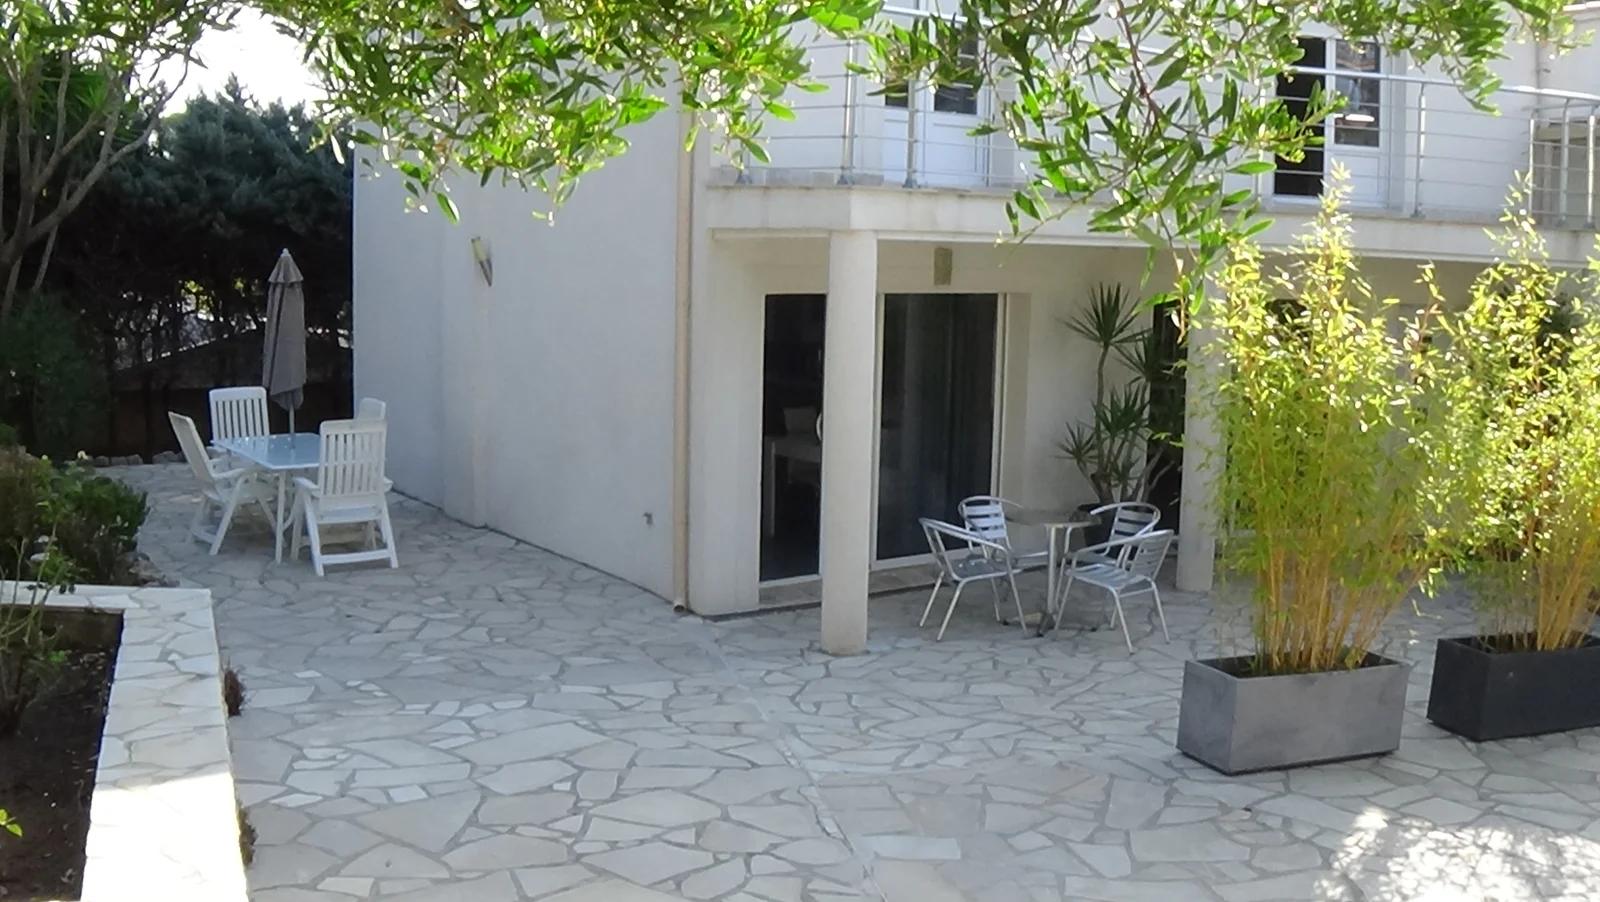 Meeting room in Attached villa / terrace / garden / pool - 1